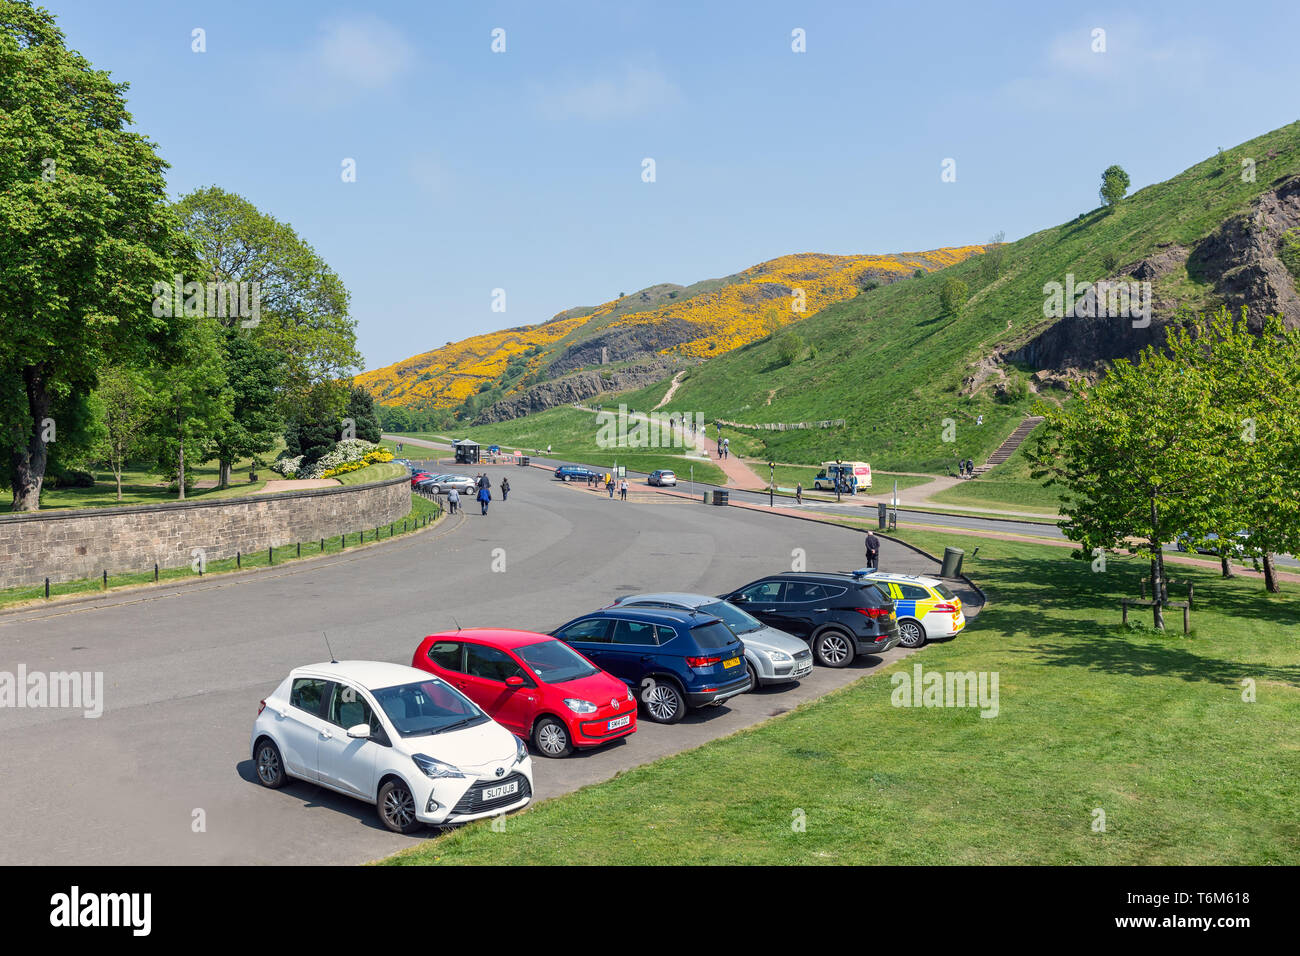 Parking place with cars near mountain Arthur's seat in Edinburgh Stock Photo